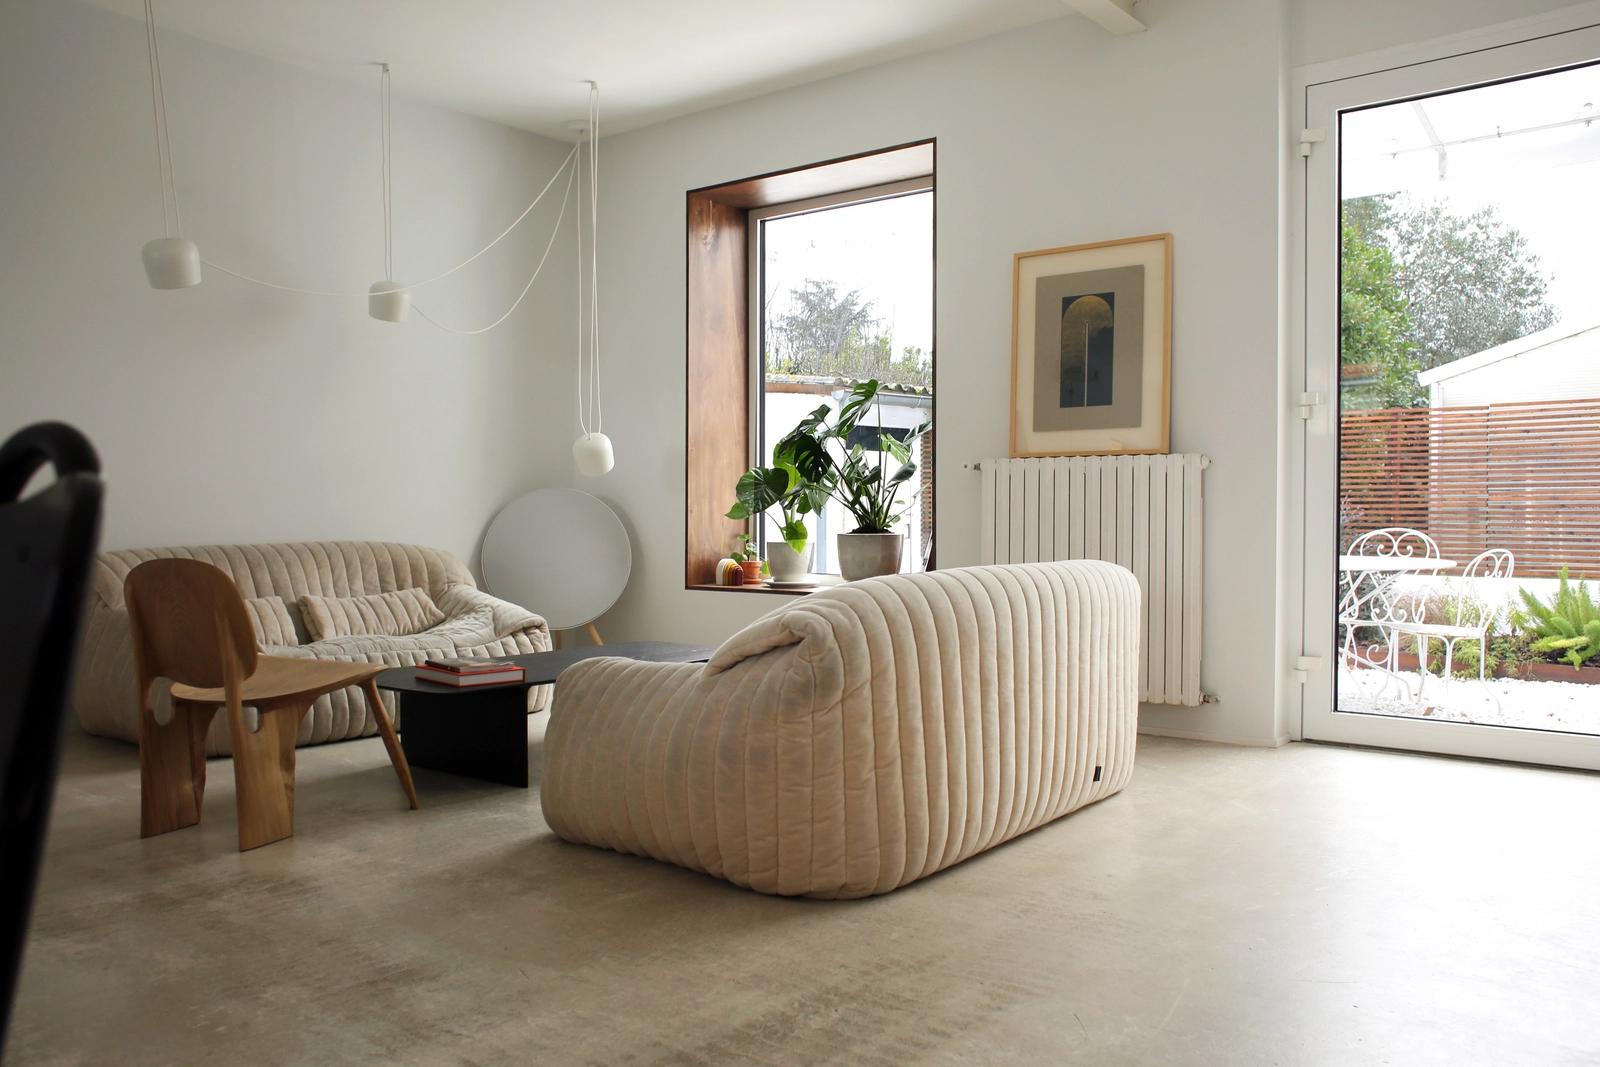 Living room in Interior designer's house - 3